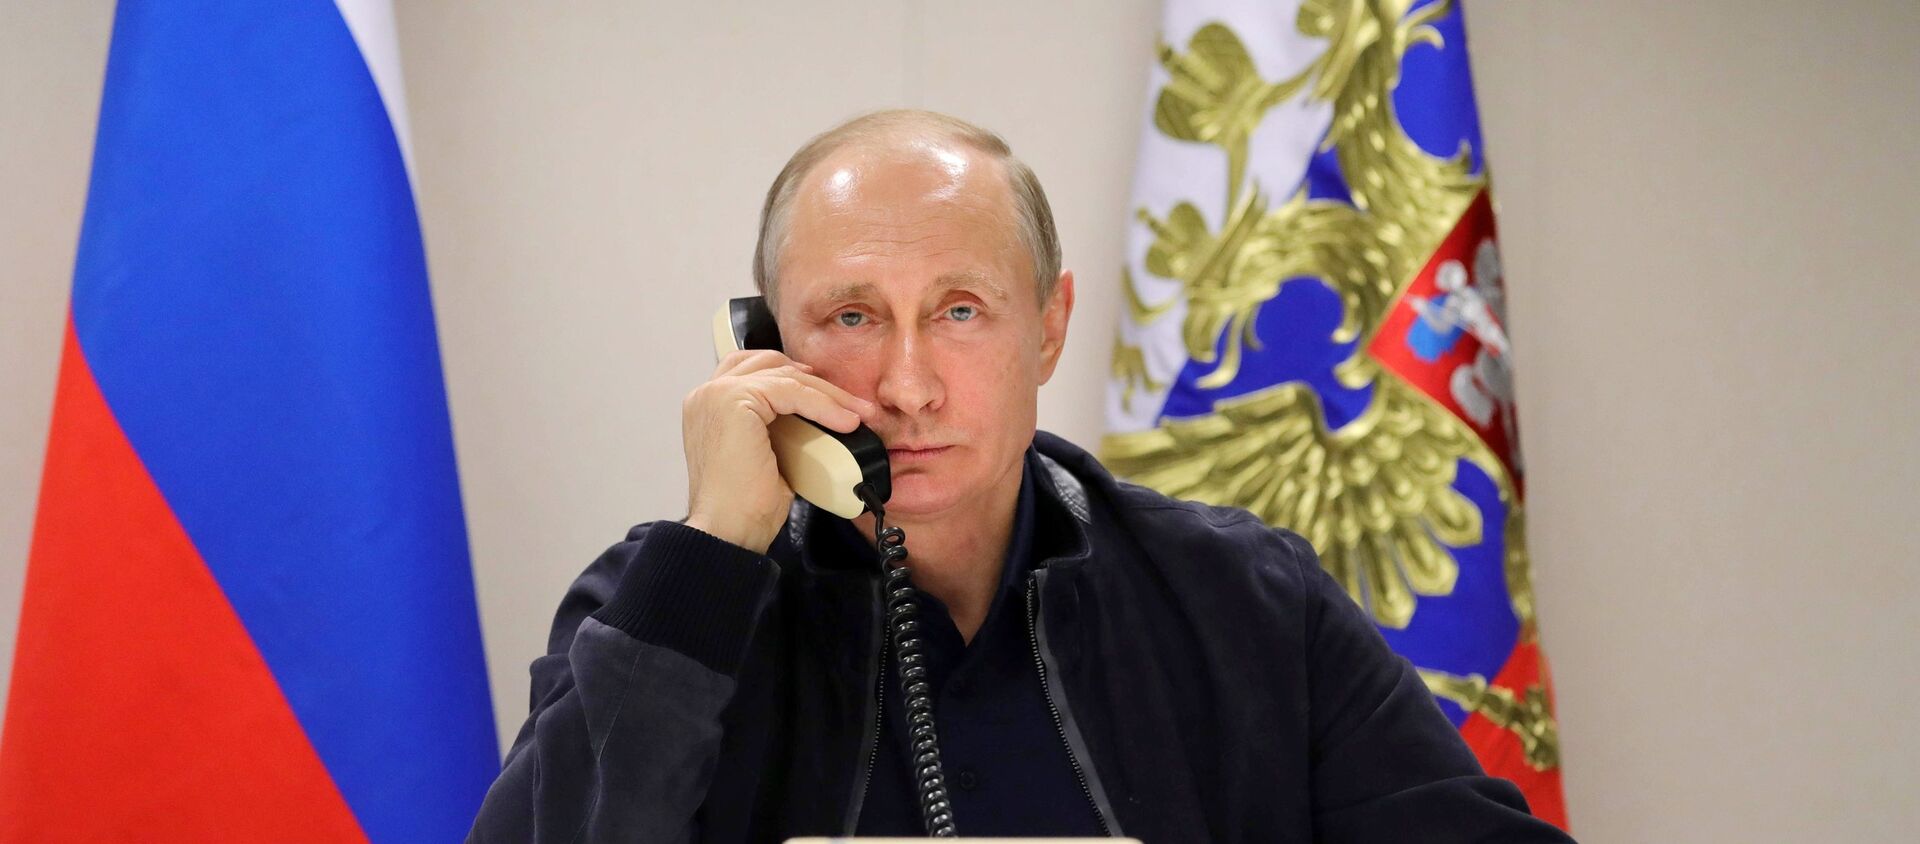 Президент РФ Владимир Путин во время телефонного разговора - Sputnik Беларусь, 1920, 08.02.2018